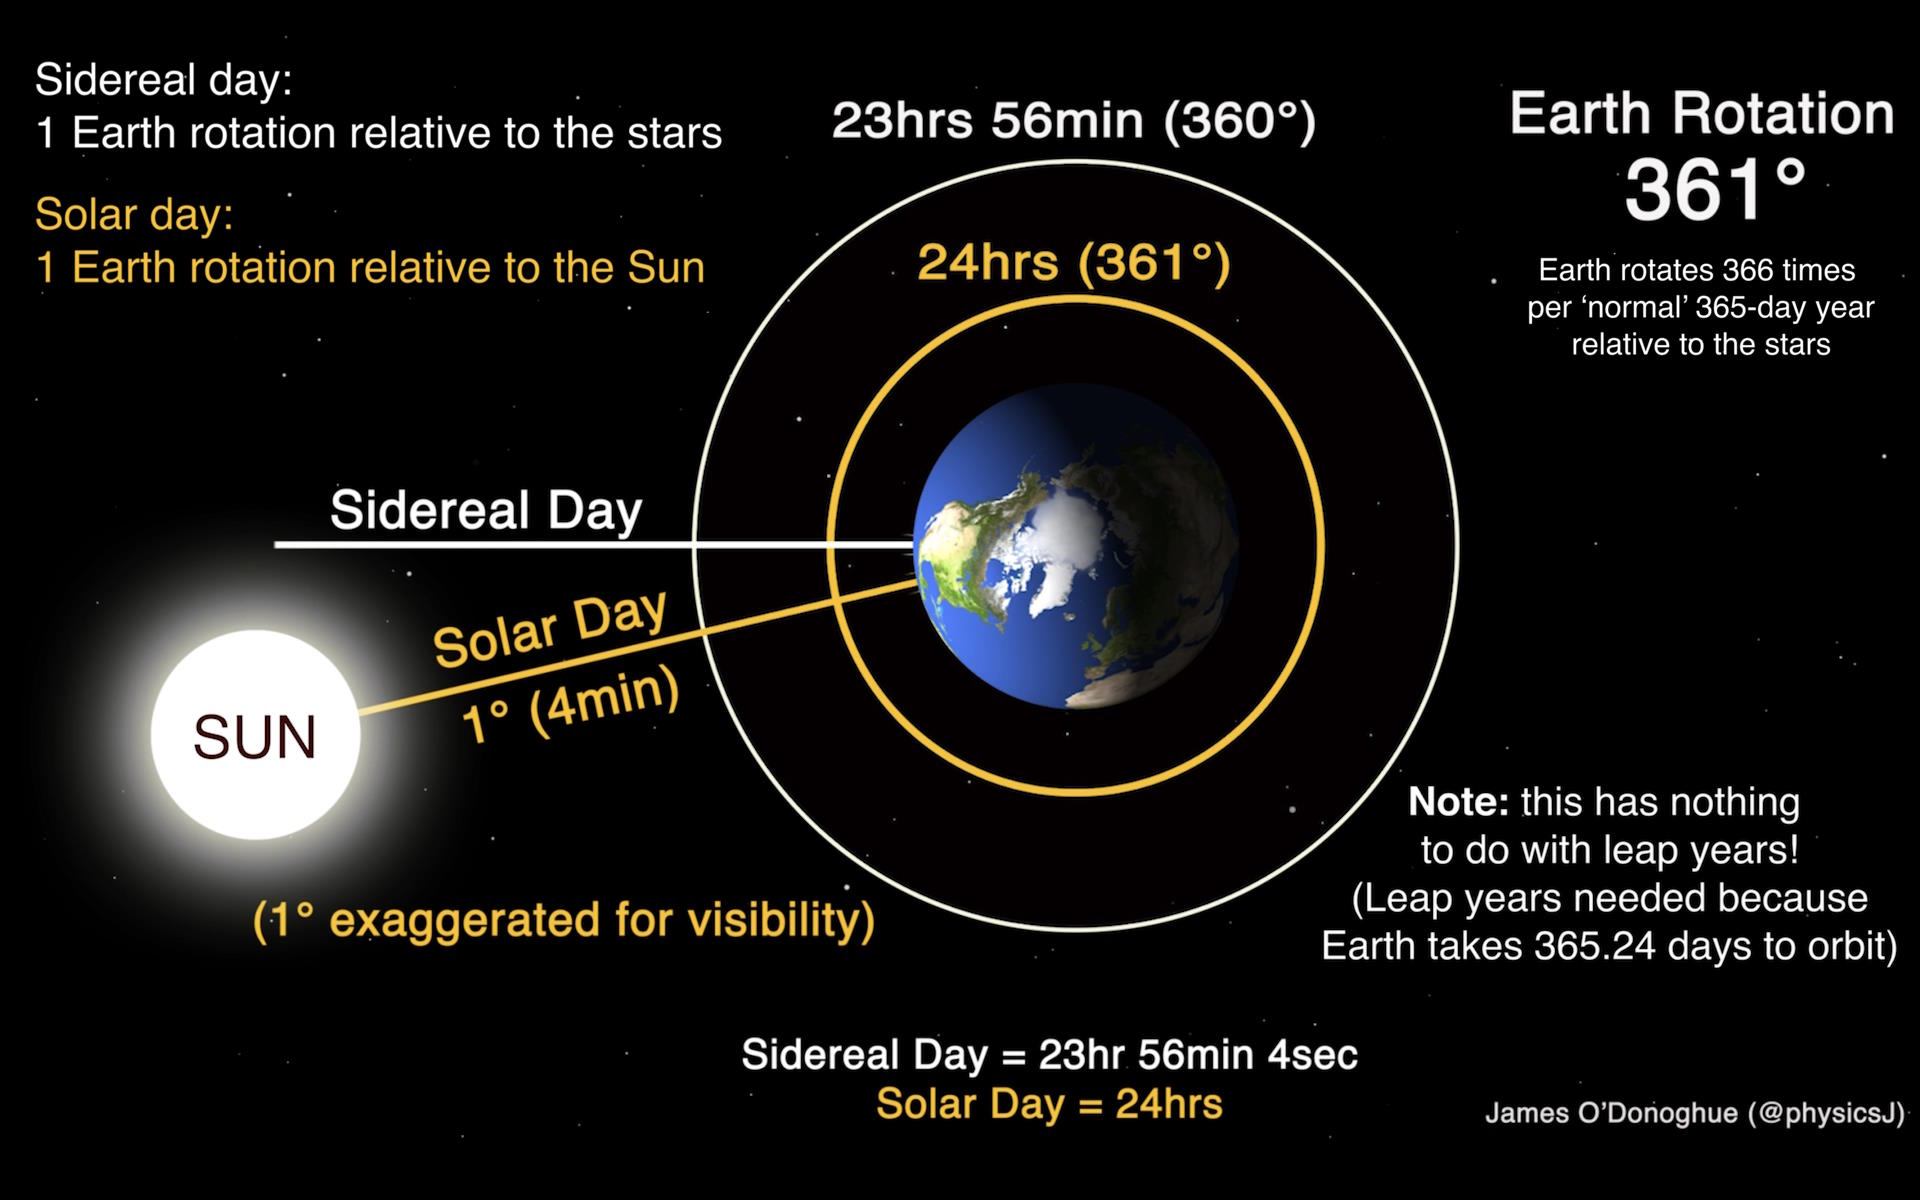 dia sideral vs dia solar